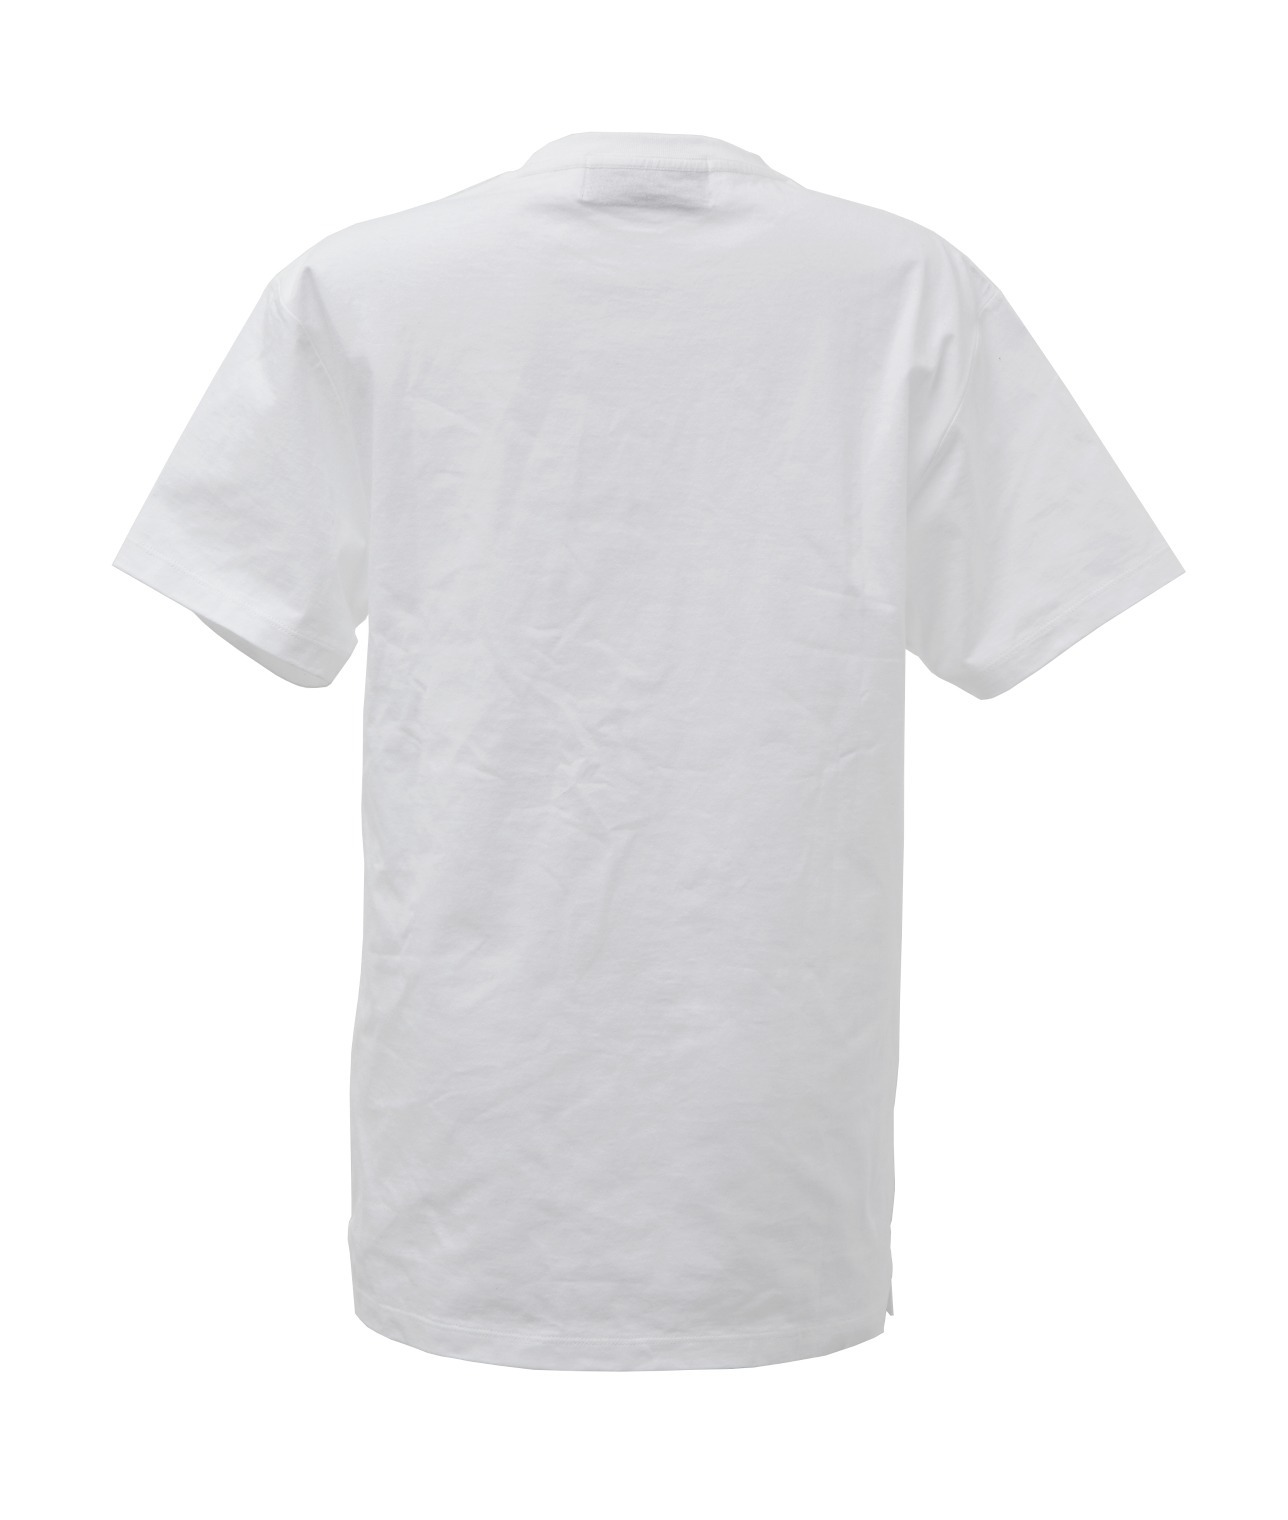 ”THIRD” Tigerロゴ刺繍Tシャツ 詳細画像 ホワイト 2